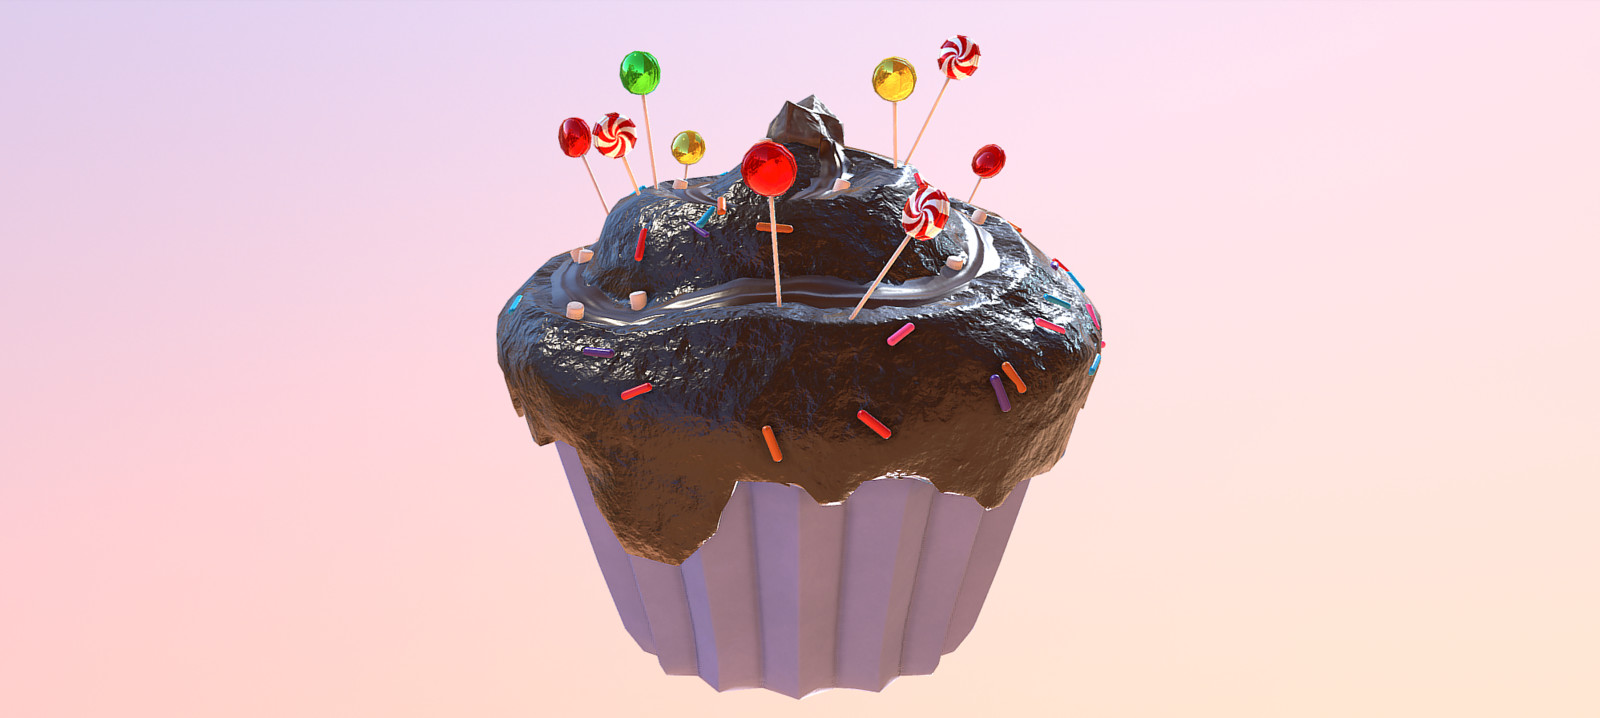 Cupcake Meditation: Animated VR Scene